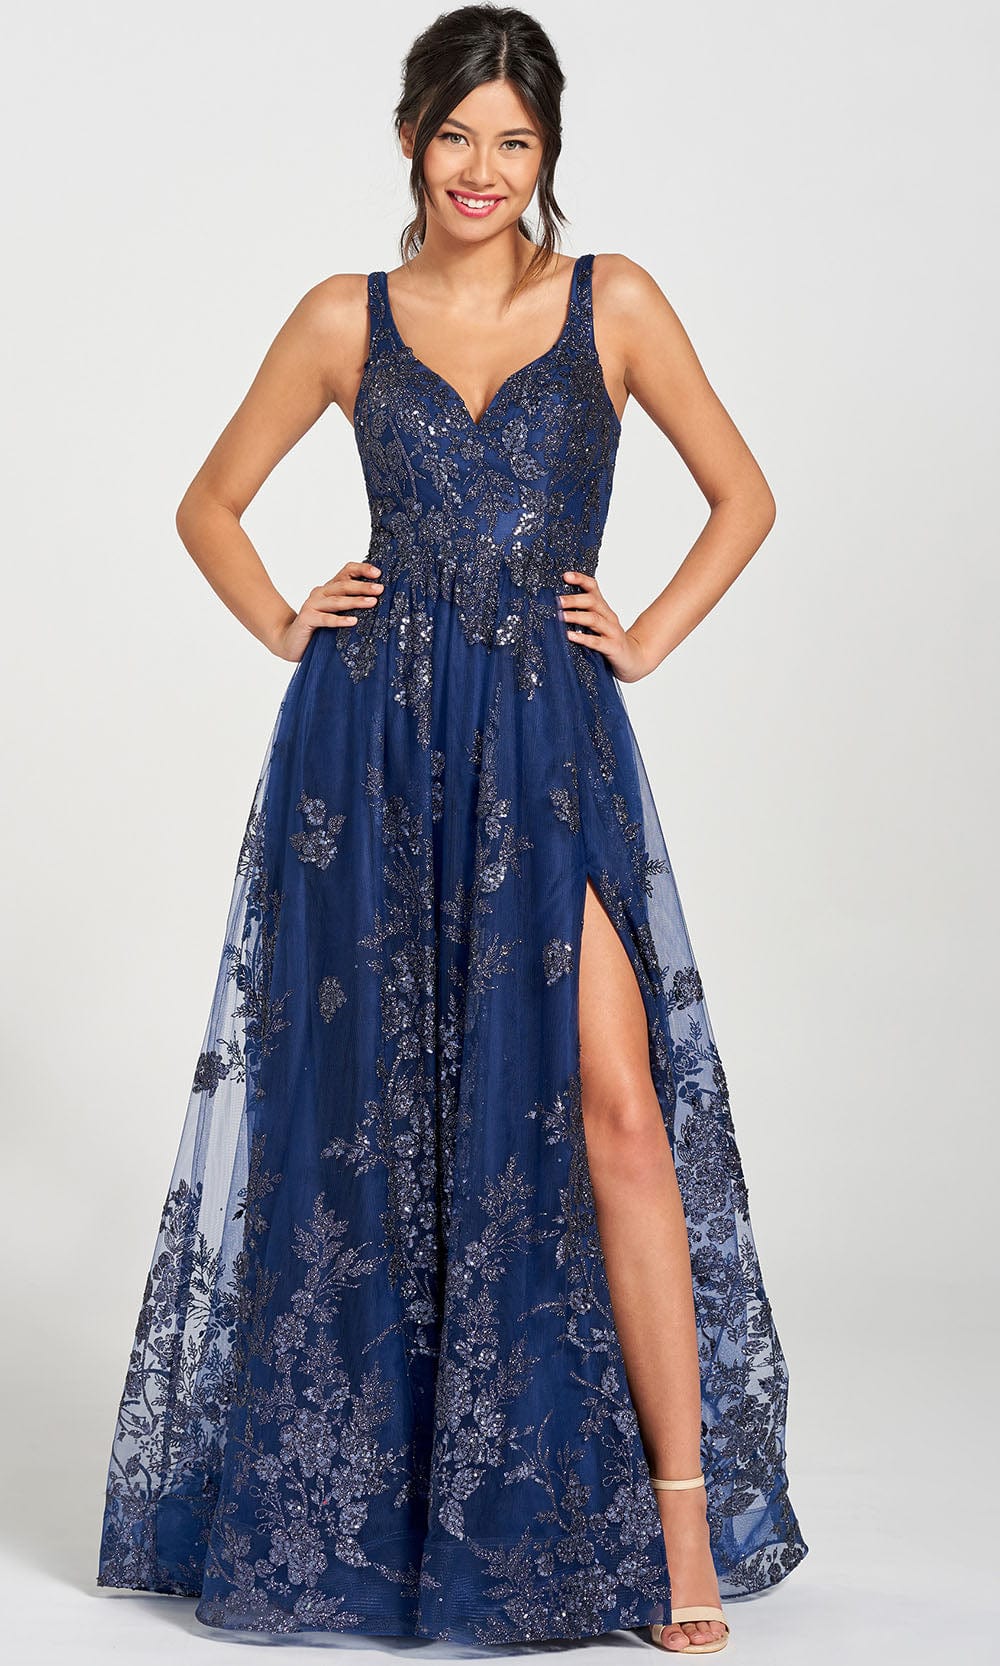 Colette For Mon Cheri CL12215 - Glitter Tulle A-line Gown Prom Dresses 00 / Navy Blue